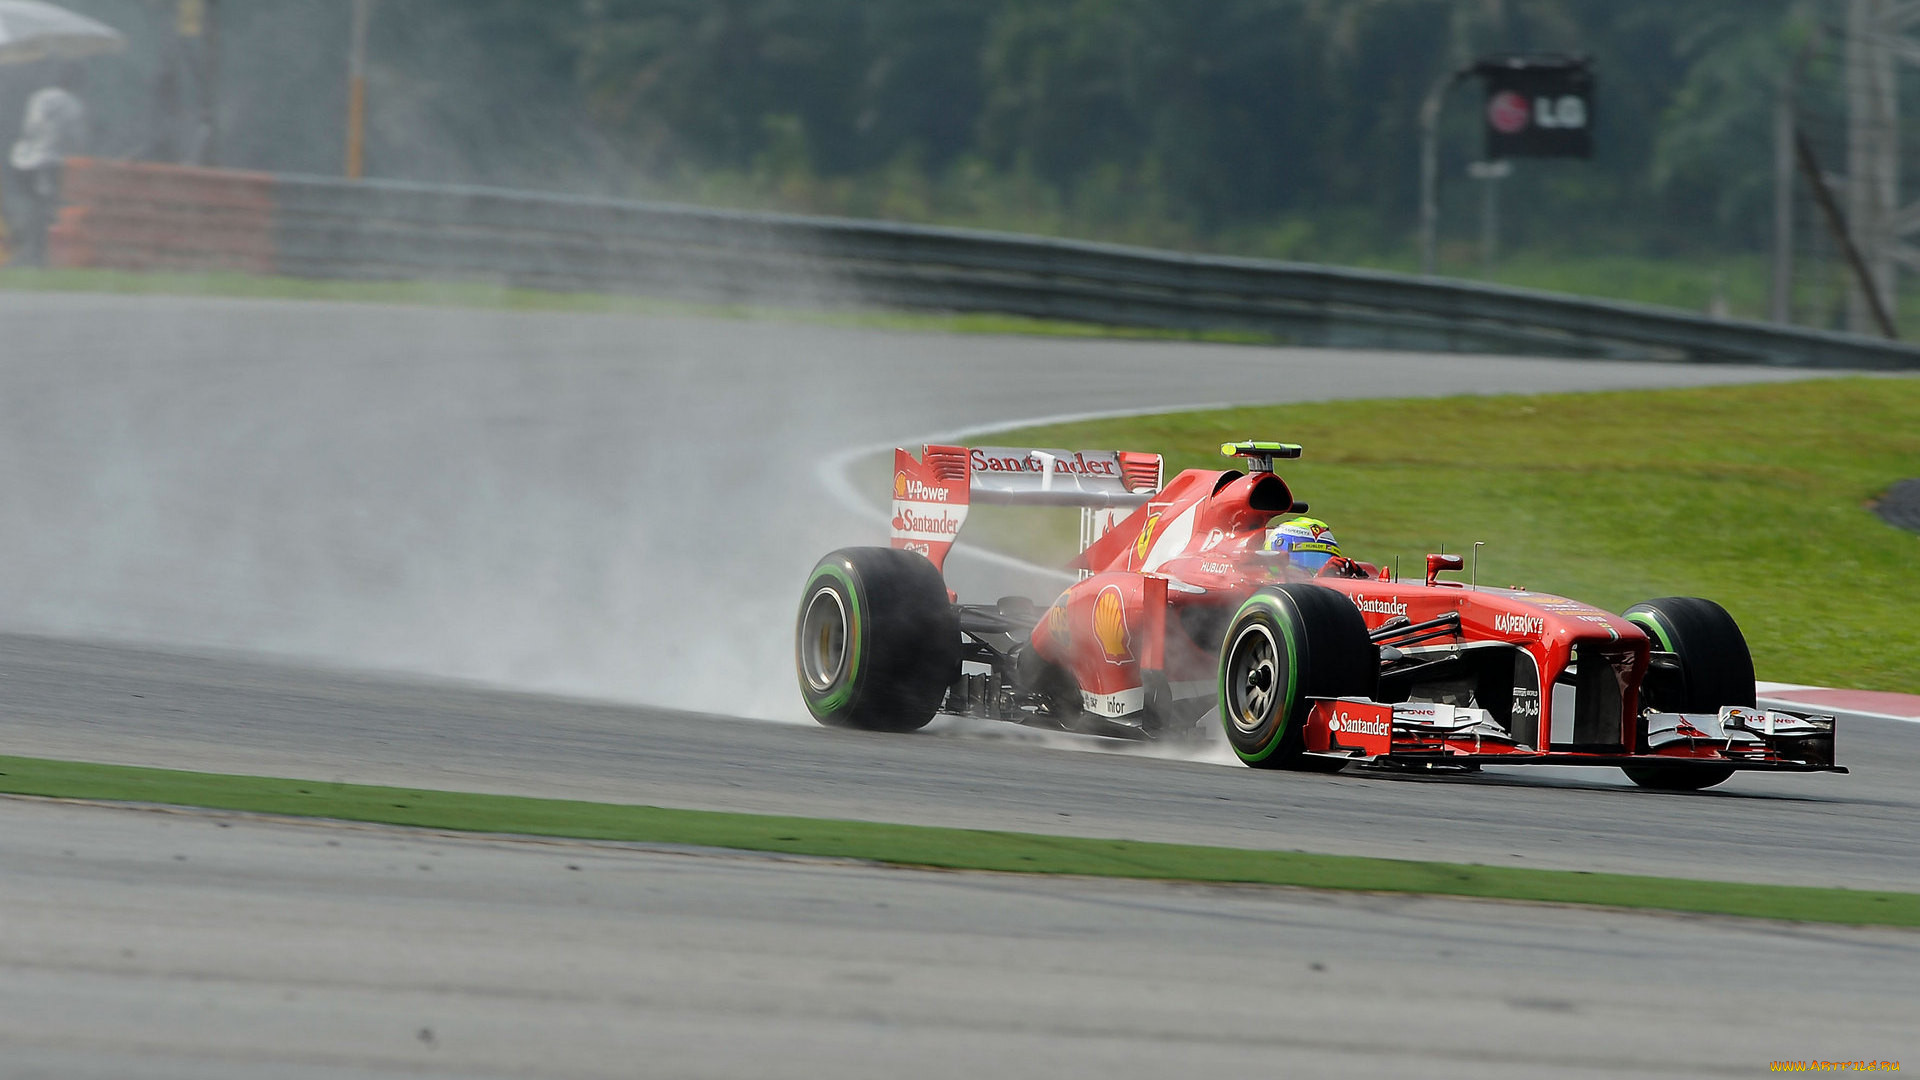 , , formula, one, malaysian, grand, prix, f1, 2013